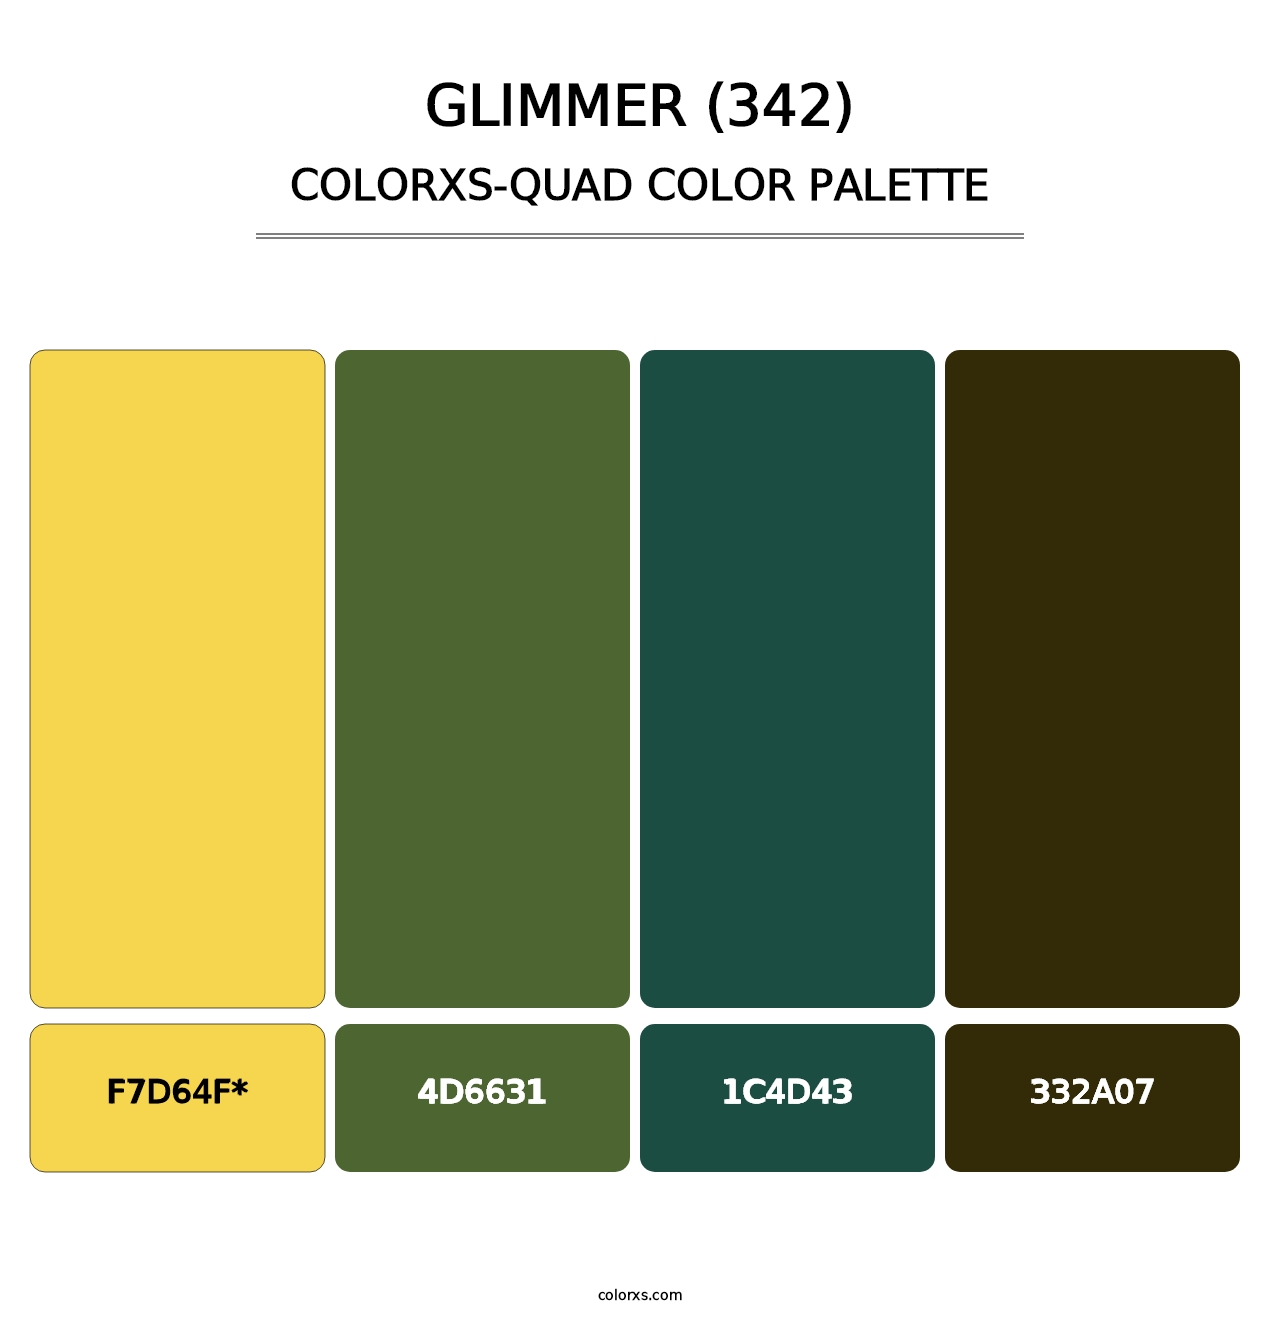 Glimmer (342) - Colorxs Quad Palette